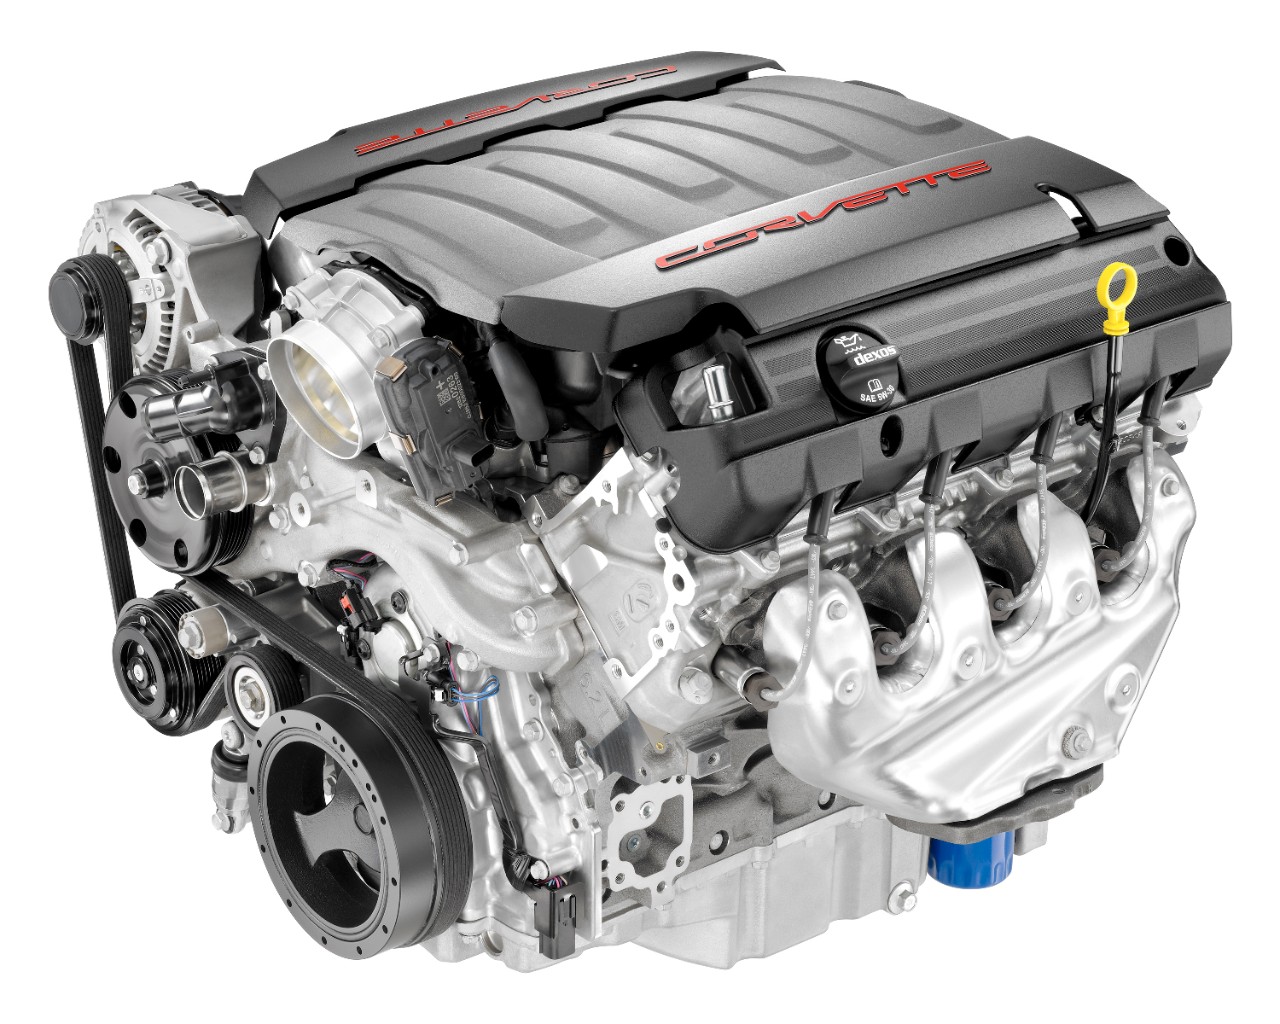 Chevrolet Unveils New V-8 Engine for 2014 Corvette Sports Car